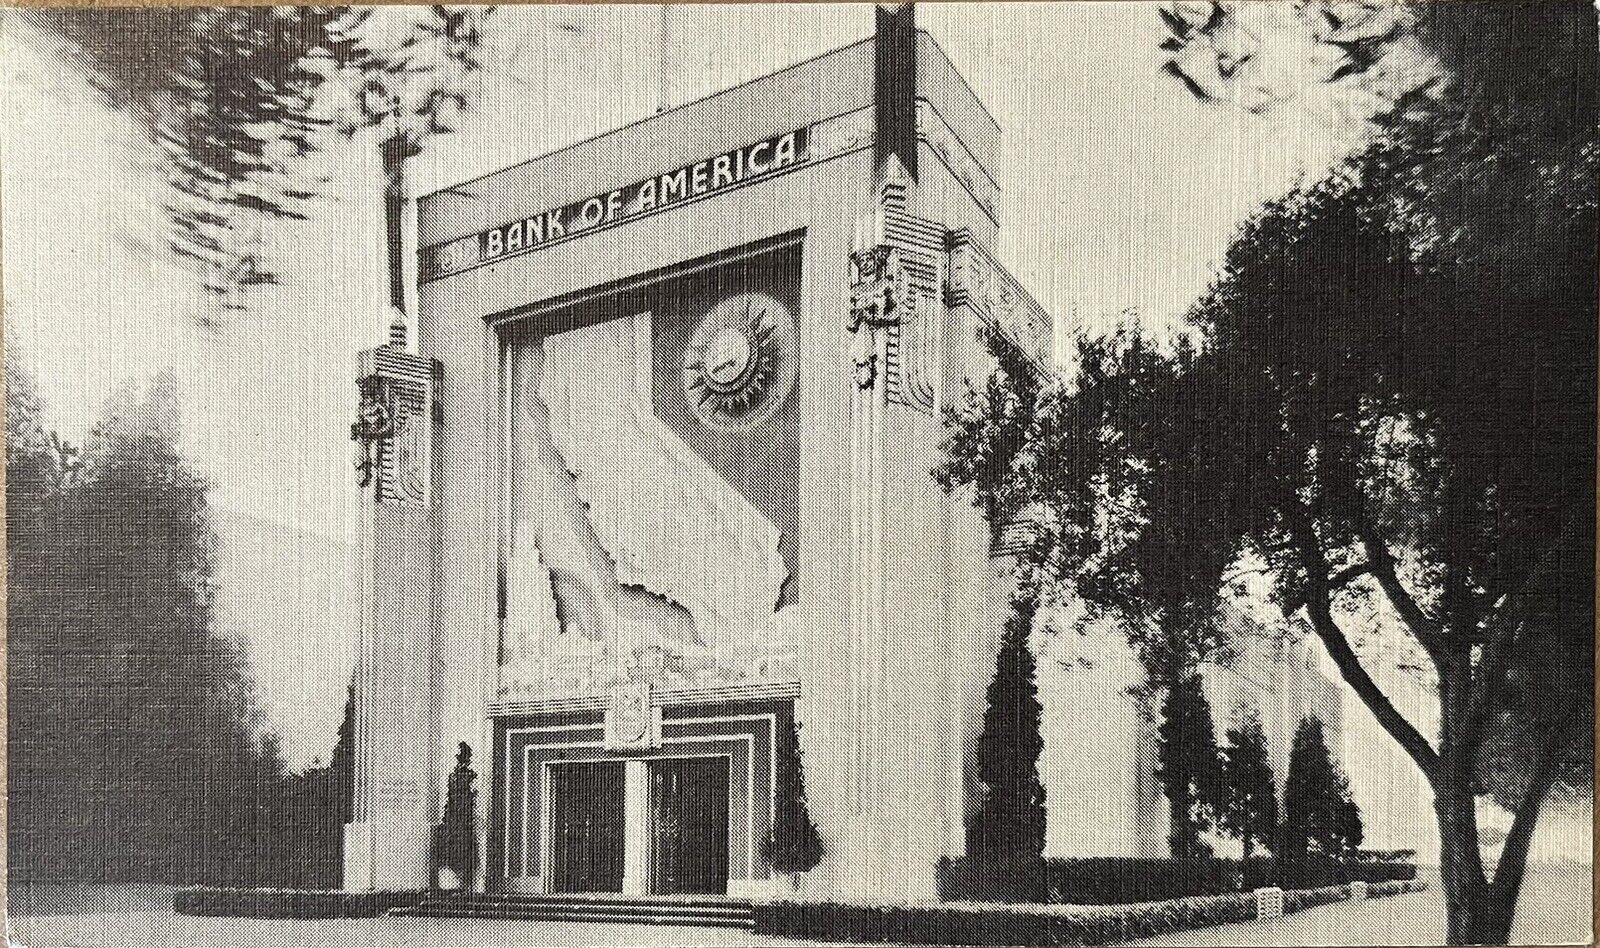 Golden Gate International Exposition Bank of America California Postcard 1939